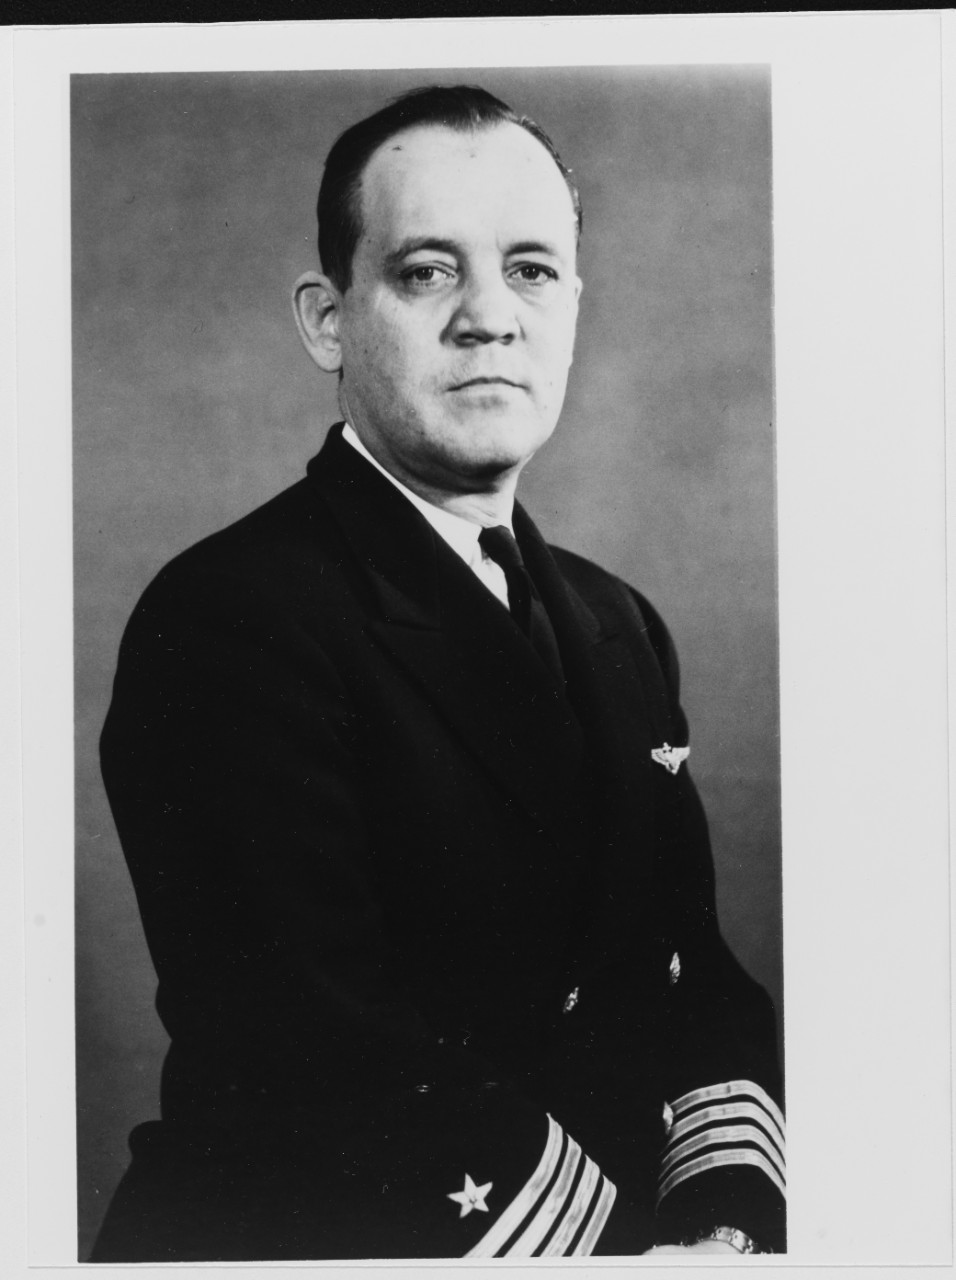 Captain James Brinckerhoff Vredenburgh, USN. Photograph taken on January 27, 1951